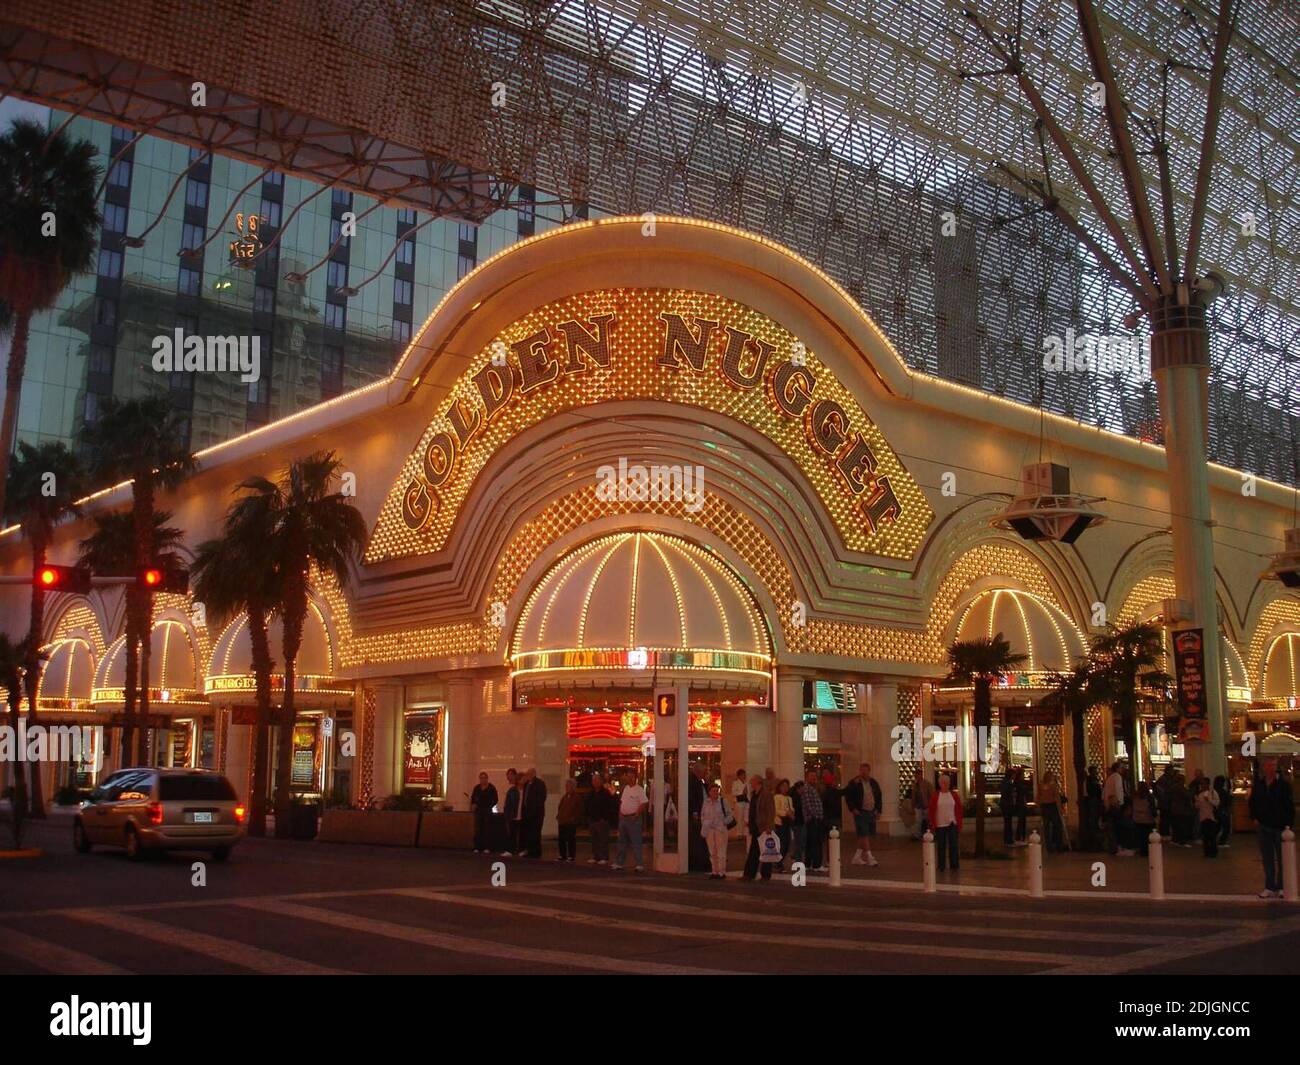 The Golden Nugget, Las Vegas, Nevada, 3/29/06 Banque D'Images